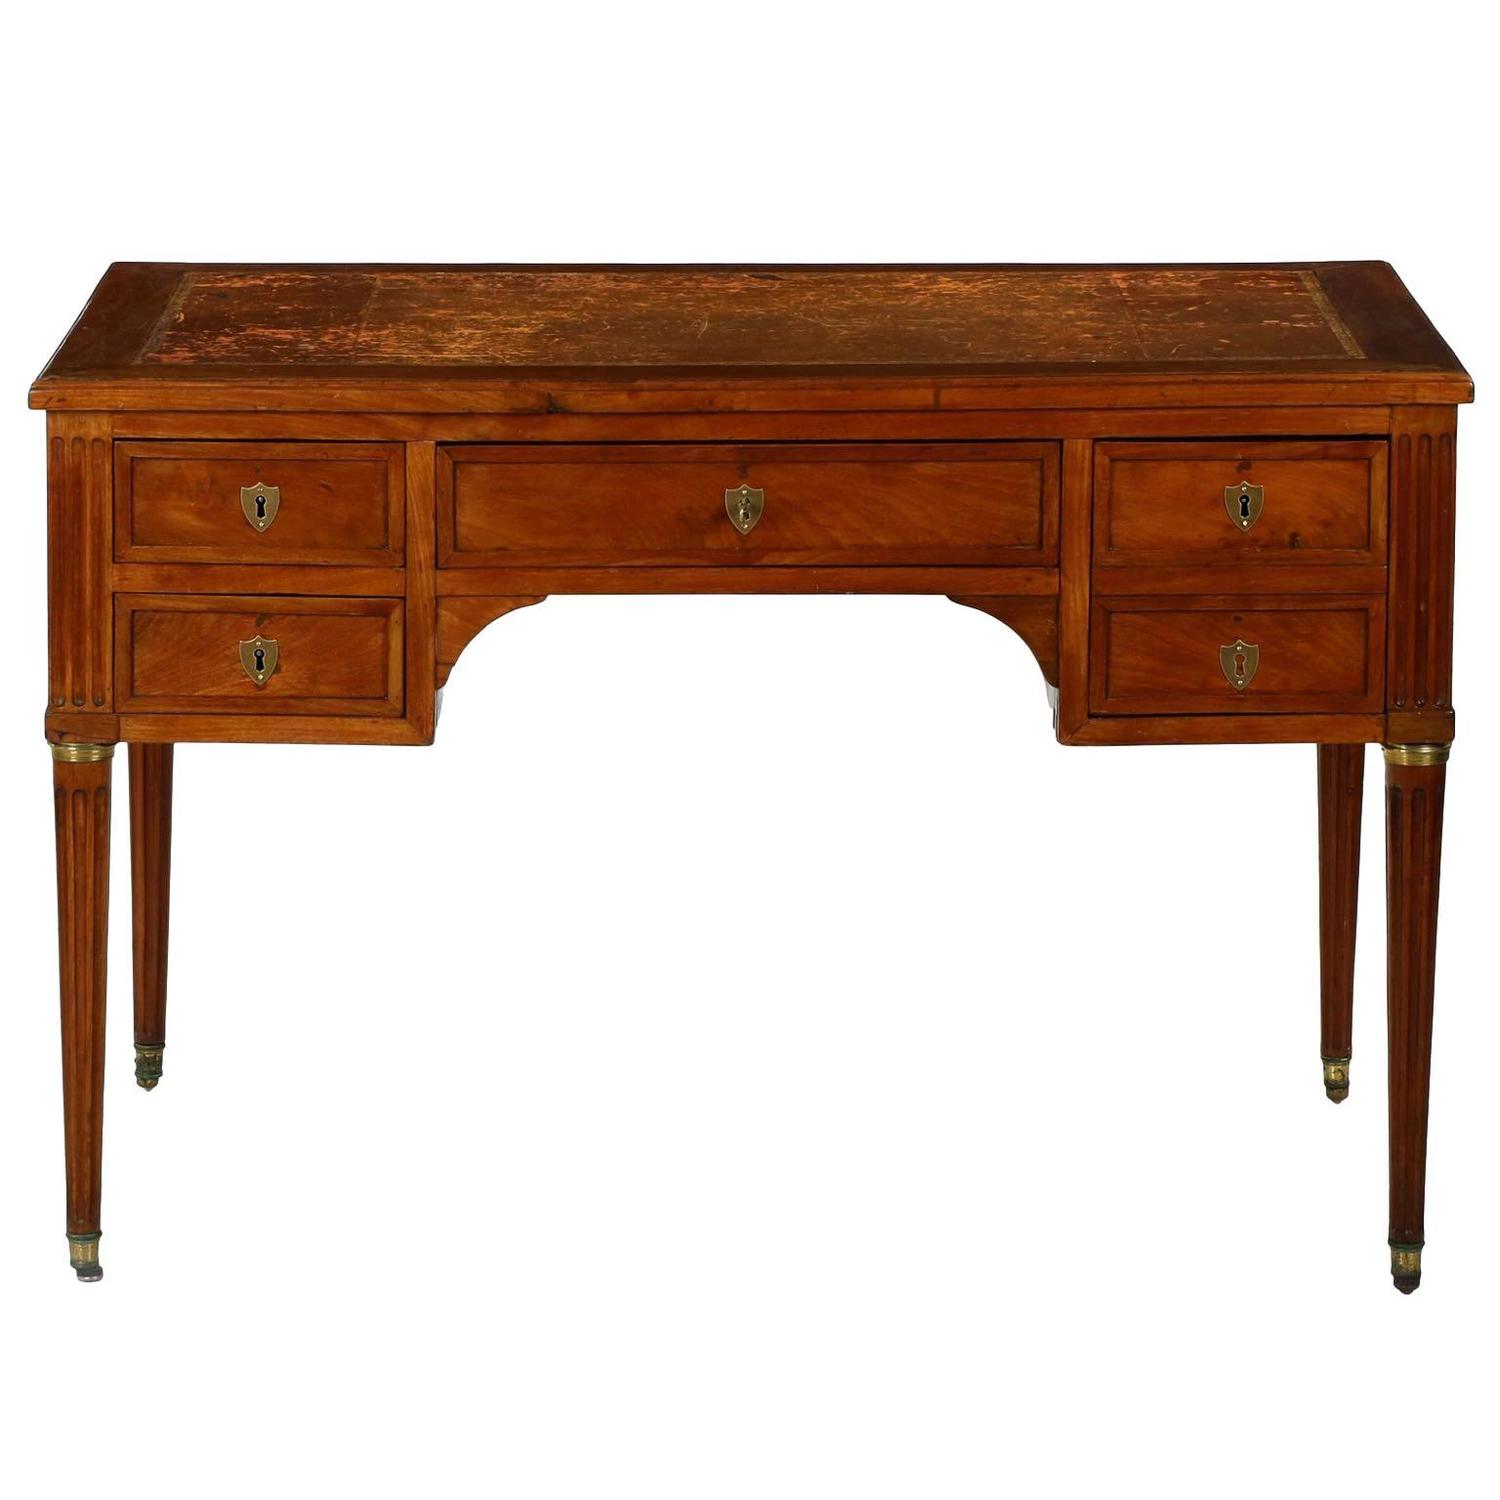 Antique_Table_Desk_all1_org_z